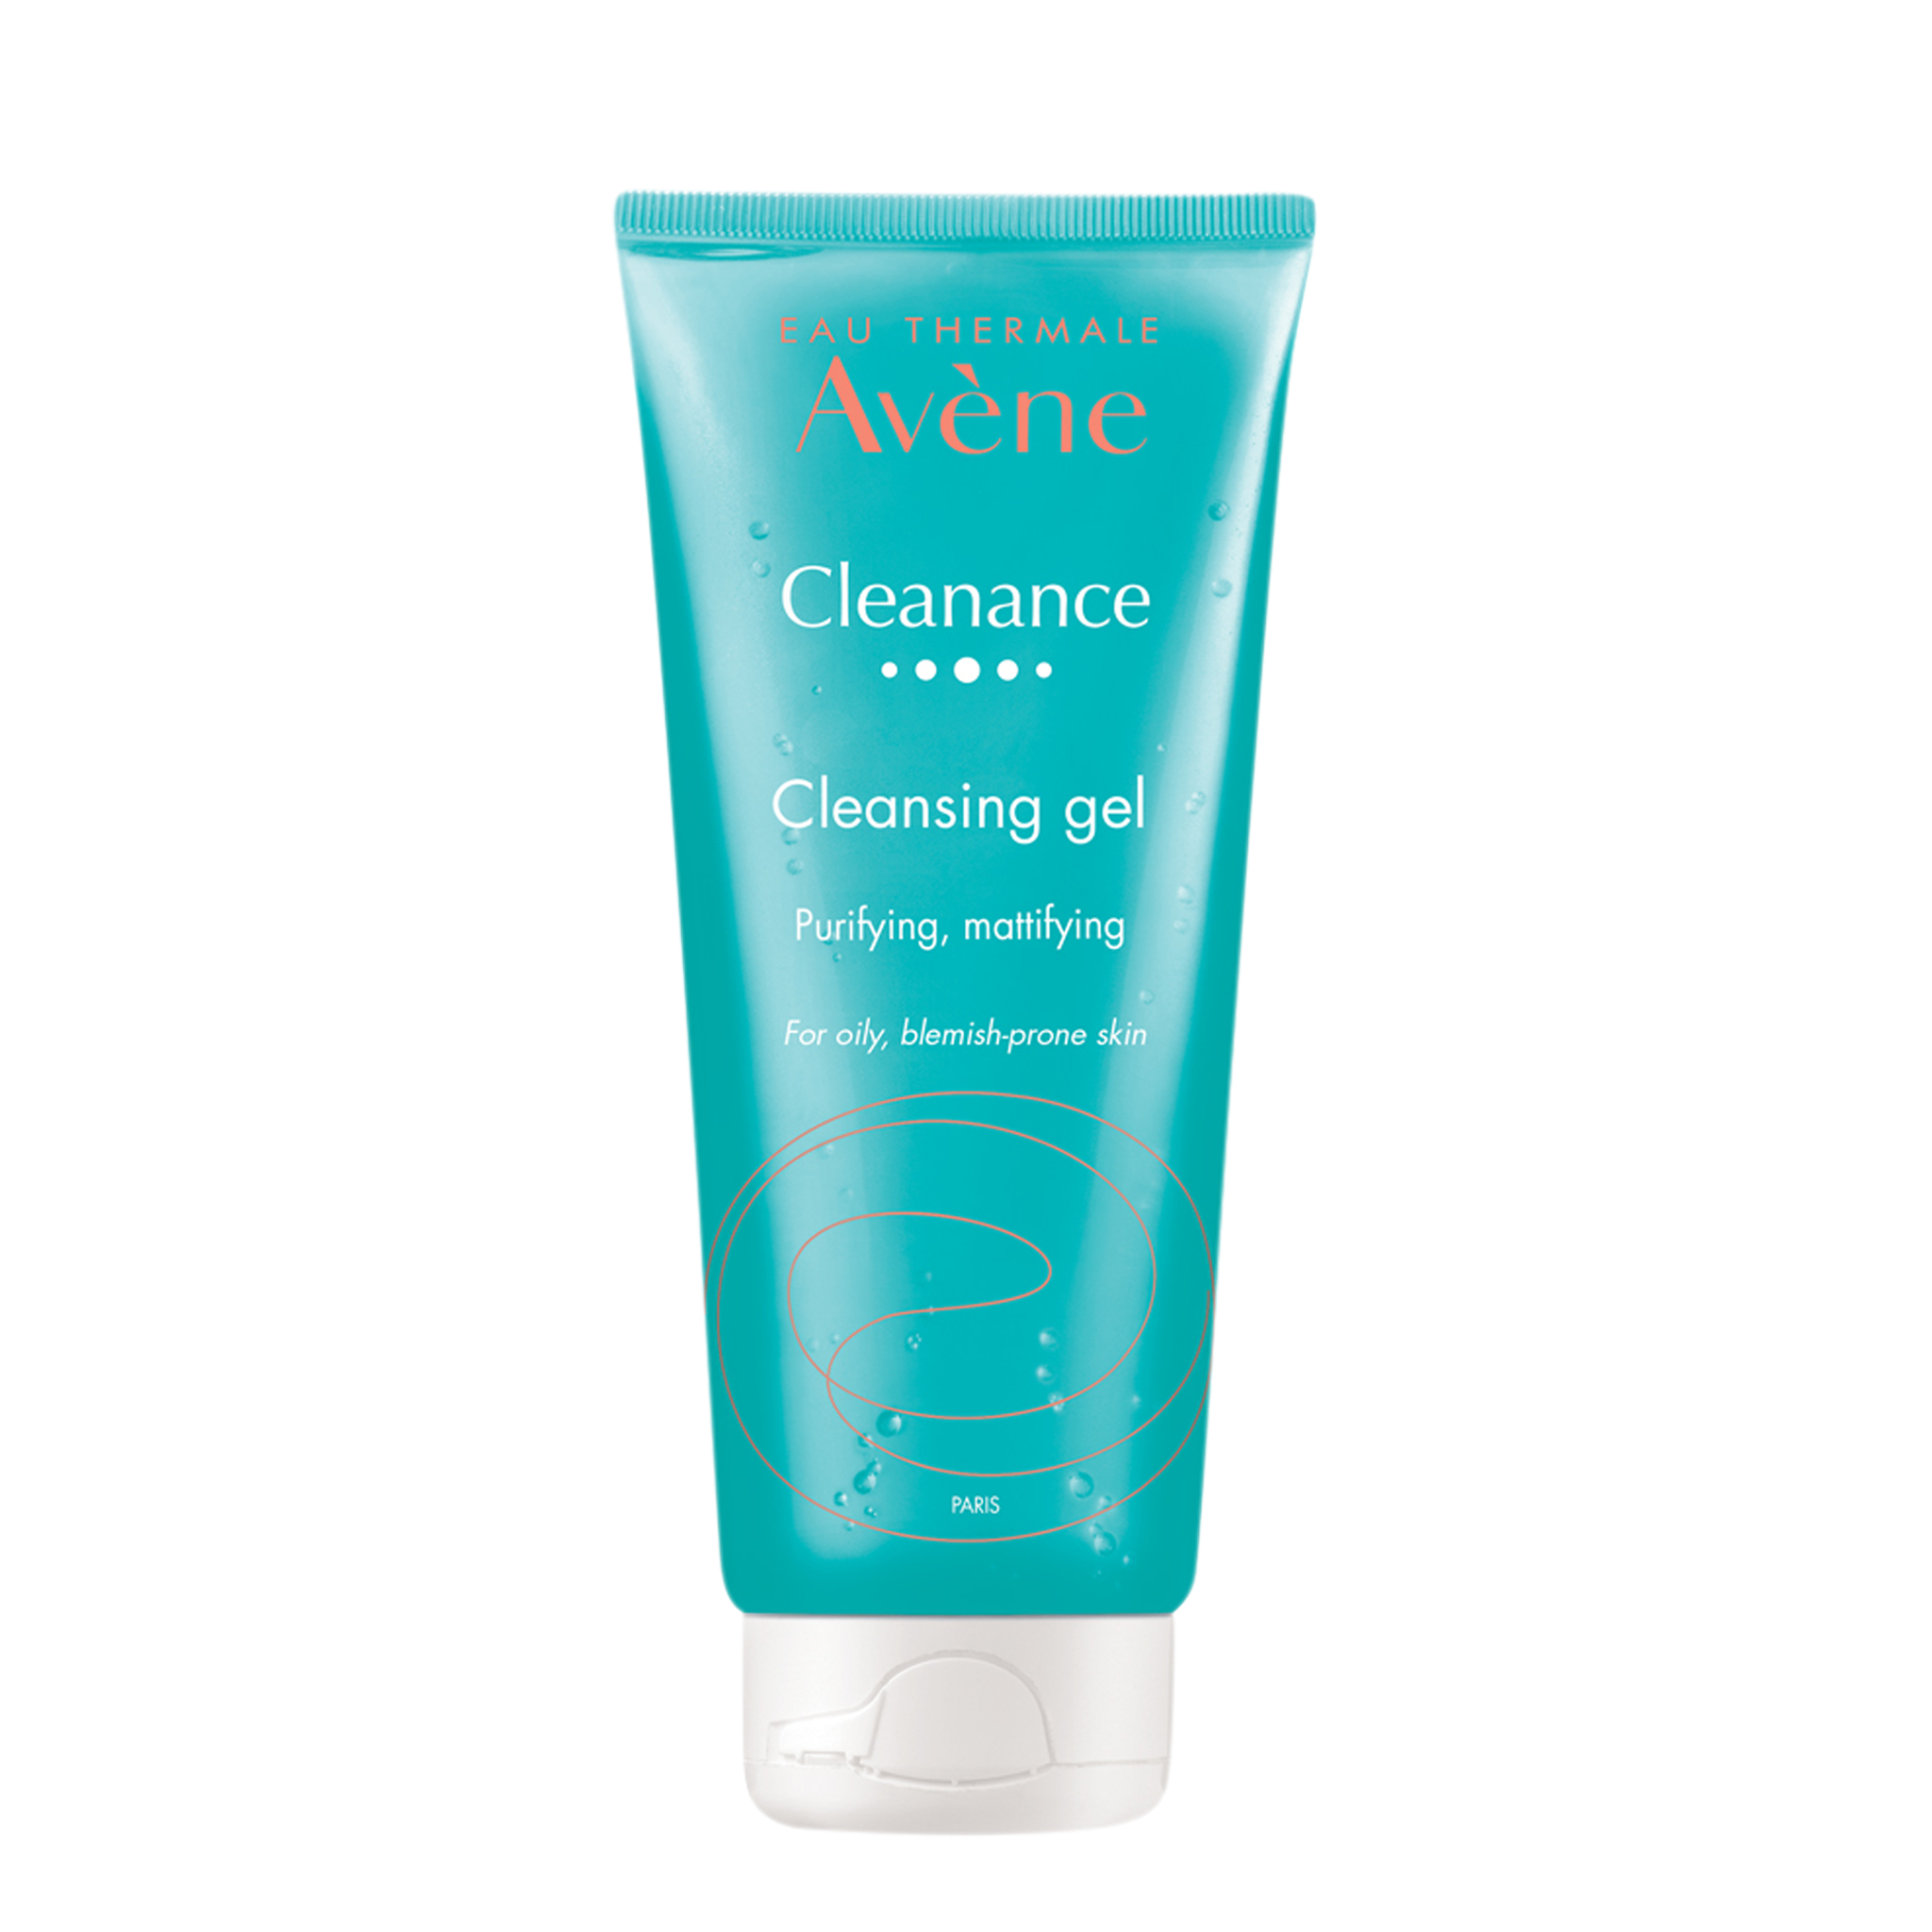 Avène Cleanance Gel 200ml - Cleanser for Oily Skin